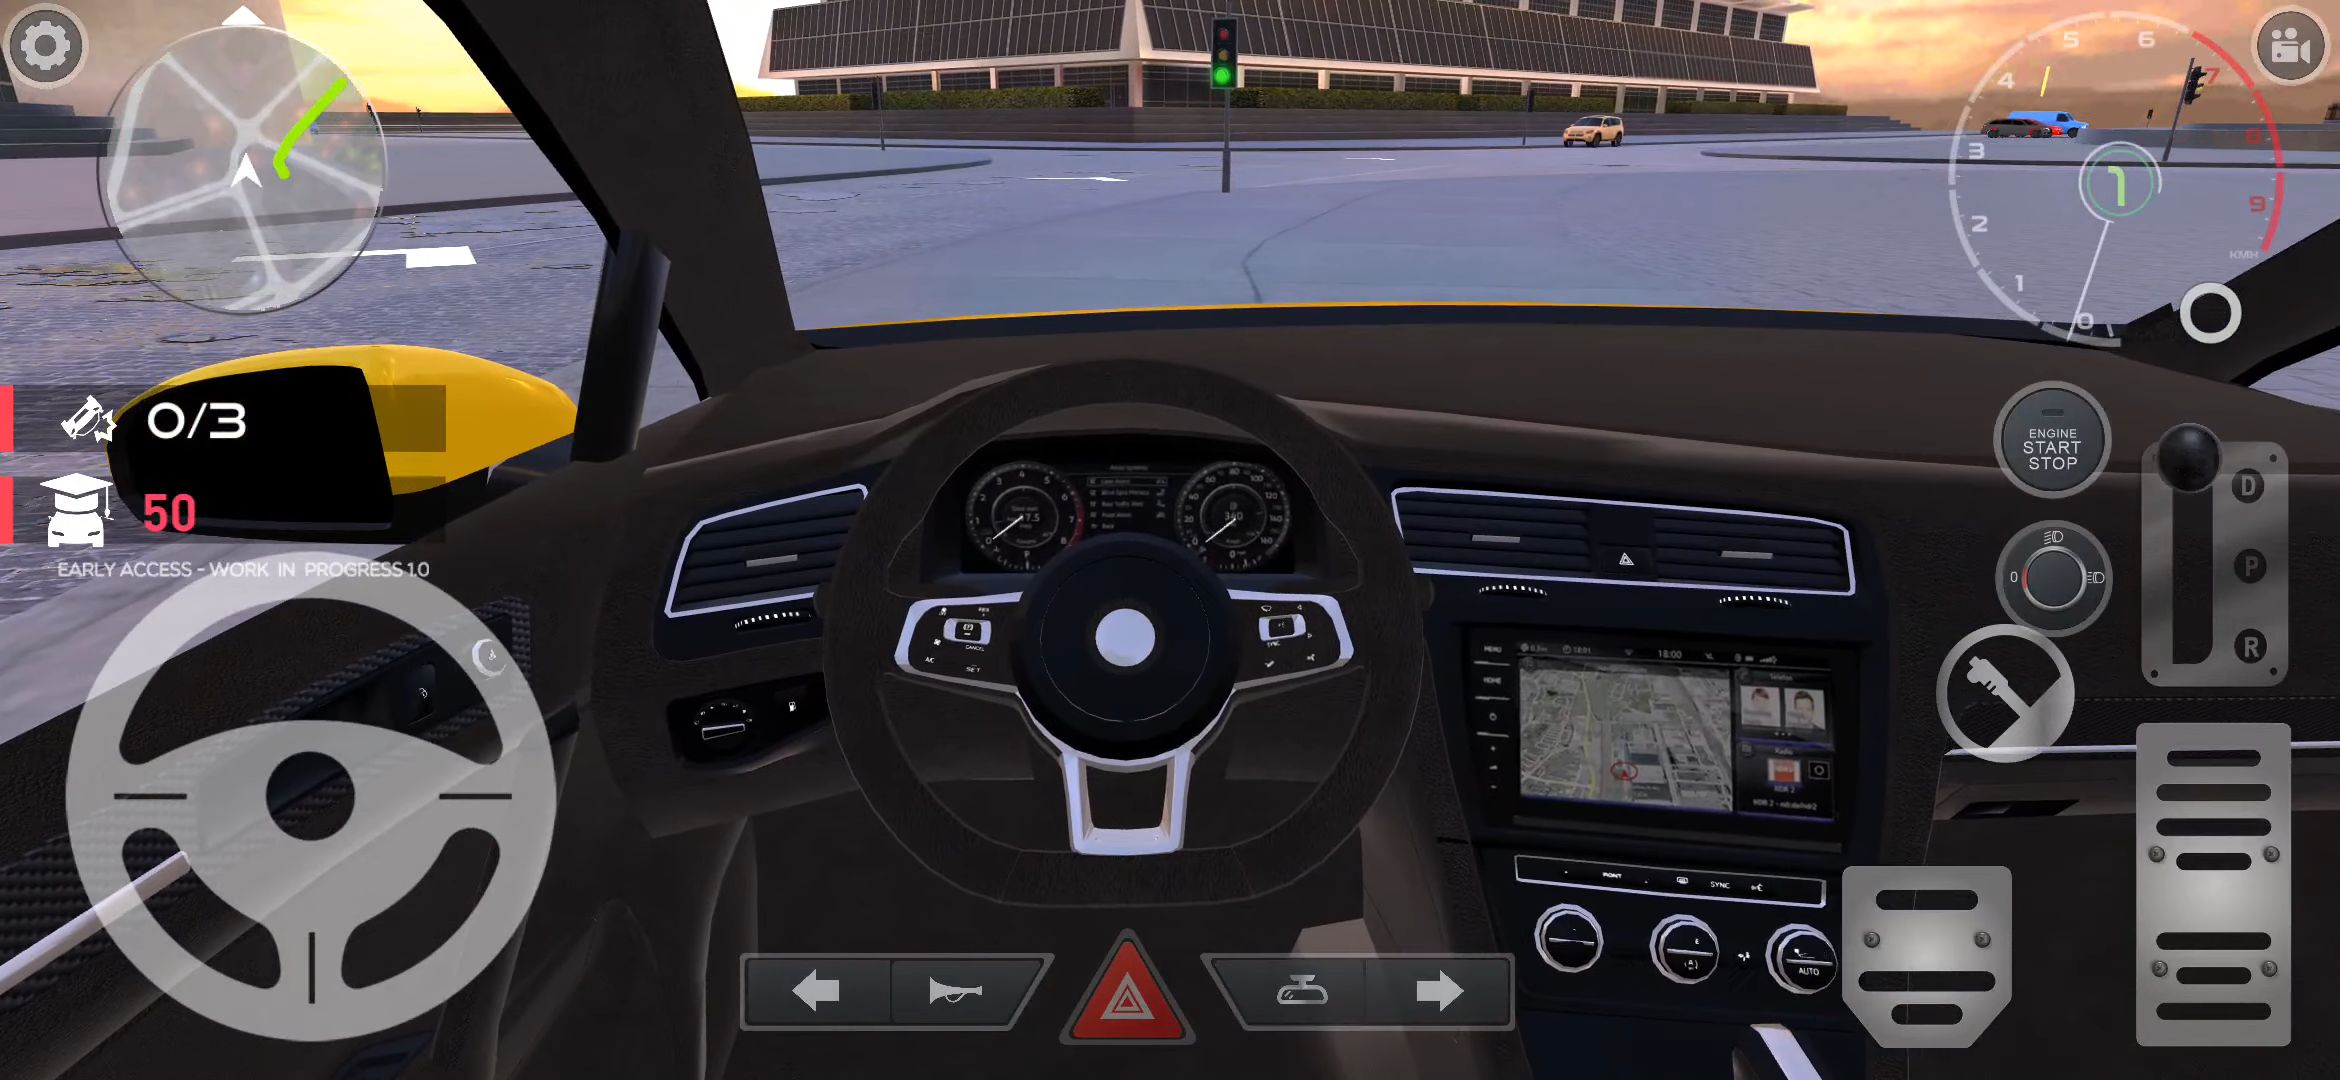 PetrolHead : Traffic Quests - Joyful City Driving для Android